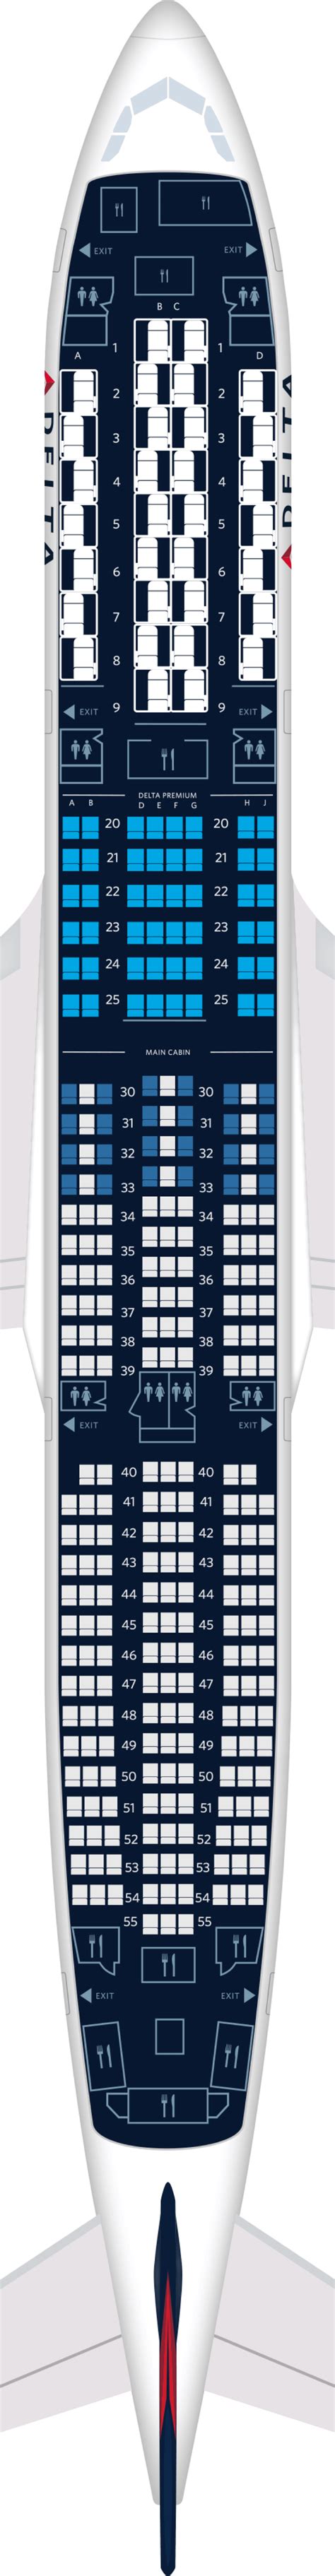 Airbus A350 Seating Arrangement Alter Playground